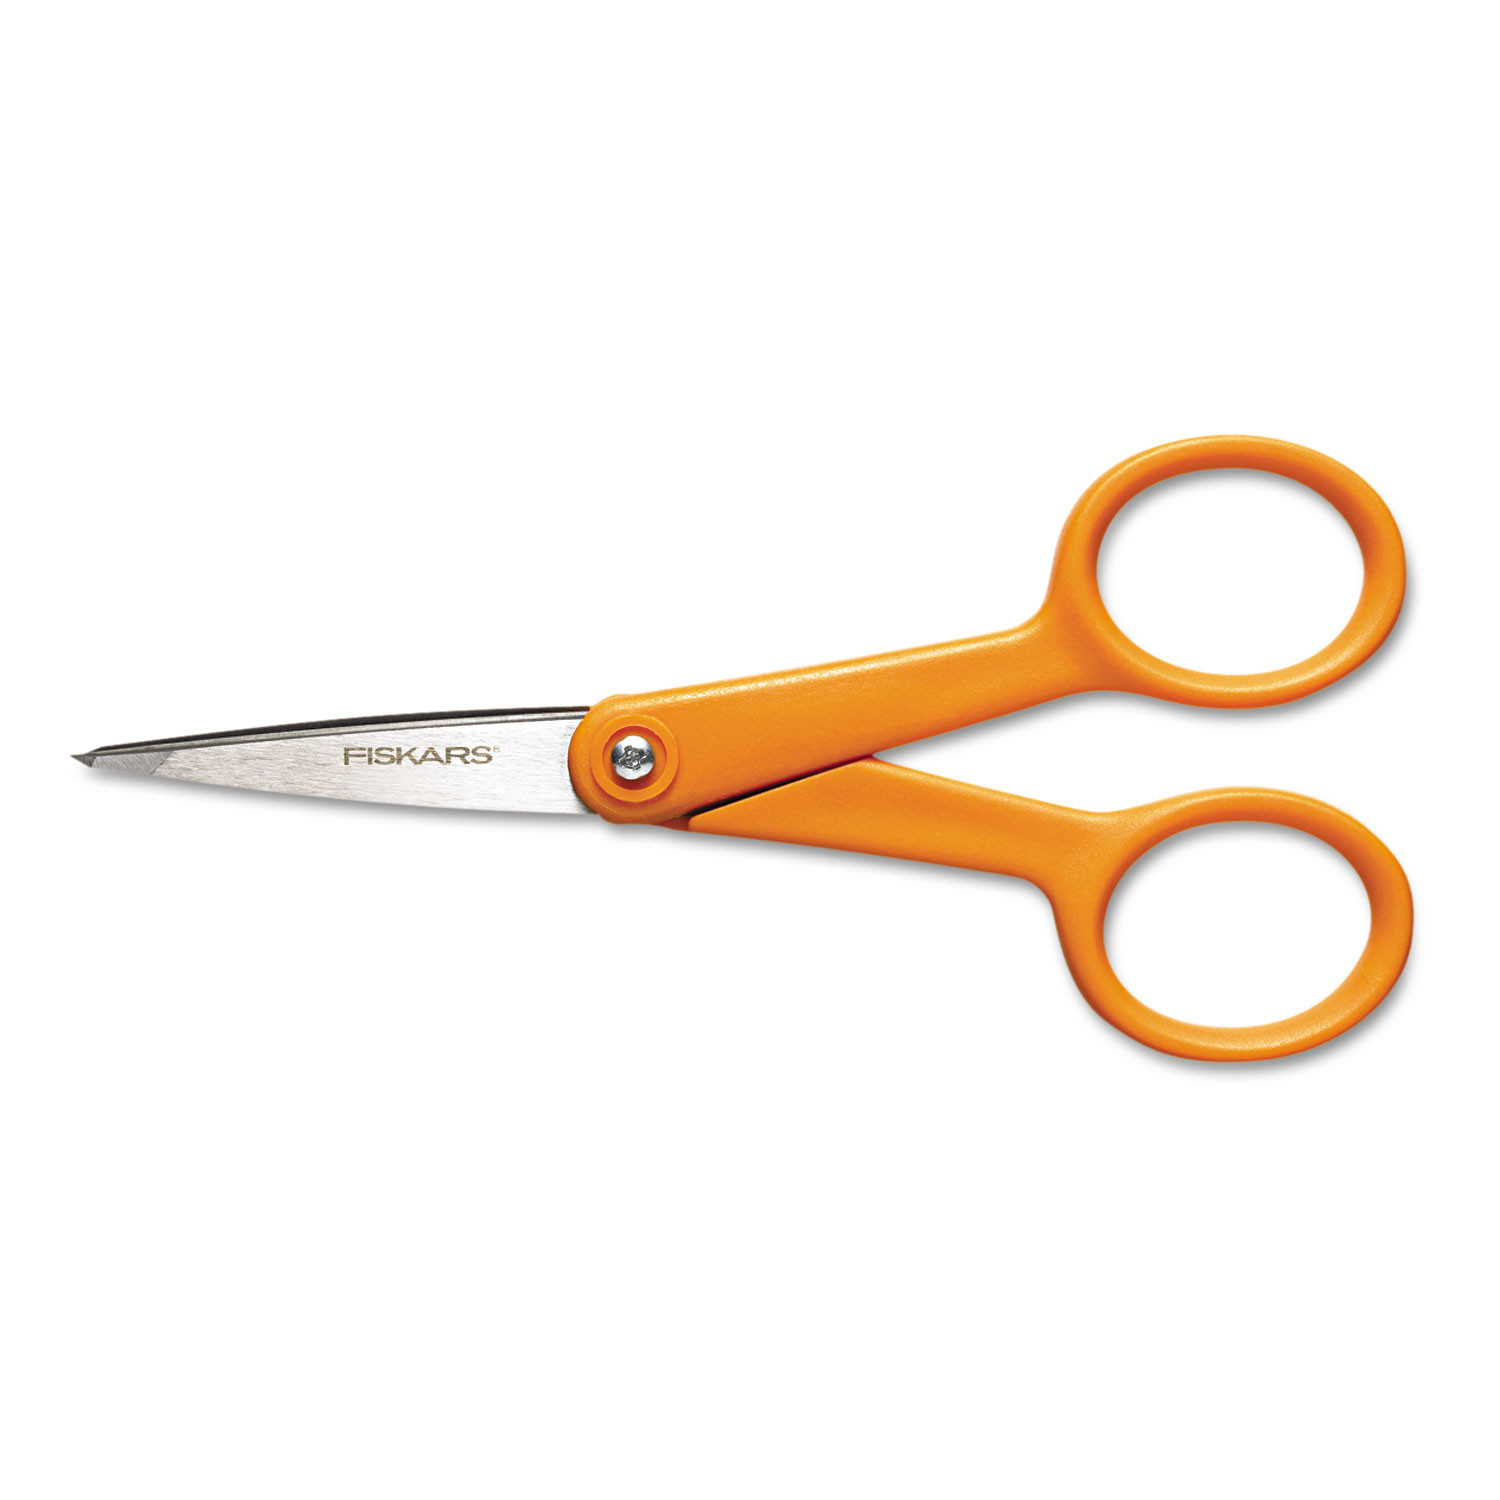 Westcott Titanium Bonded Scissors, 8 Long, 3.5 Cut Length, Gray/Yellow Straight Handle, 3/Box